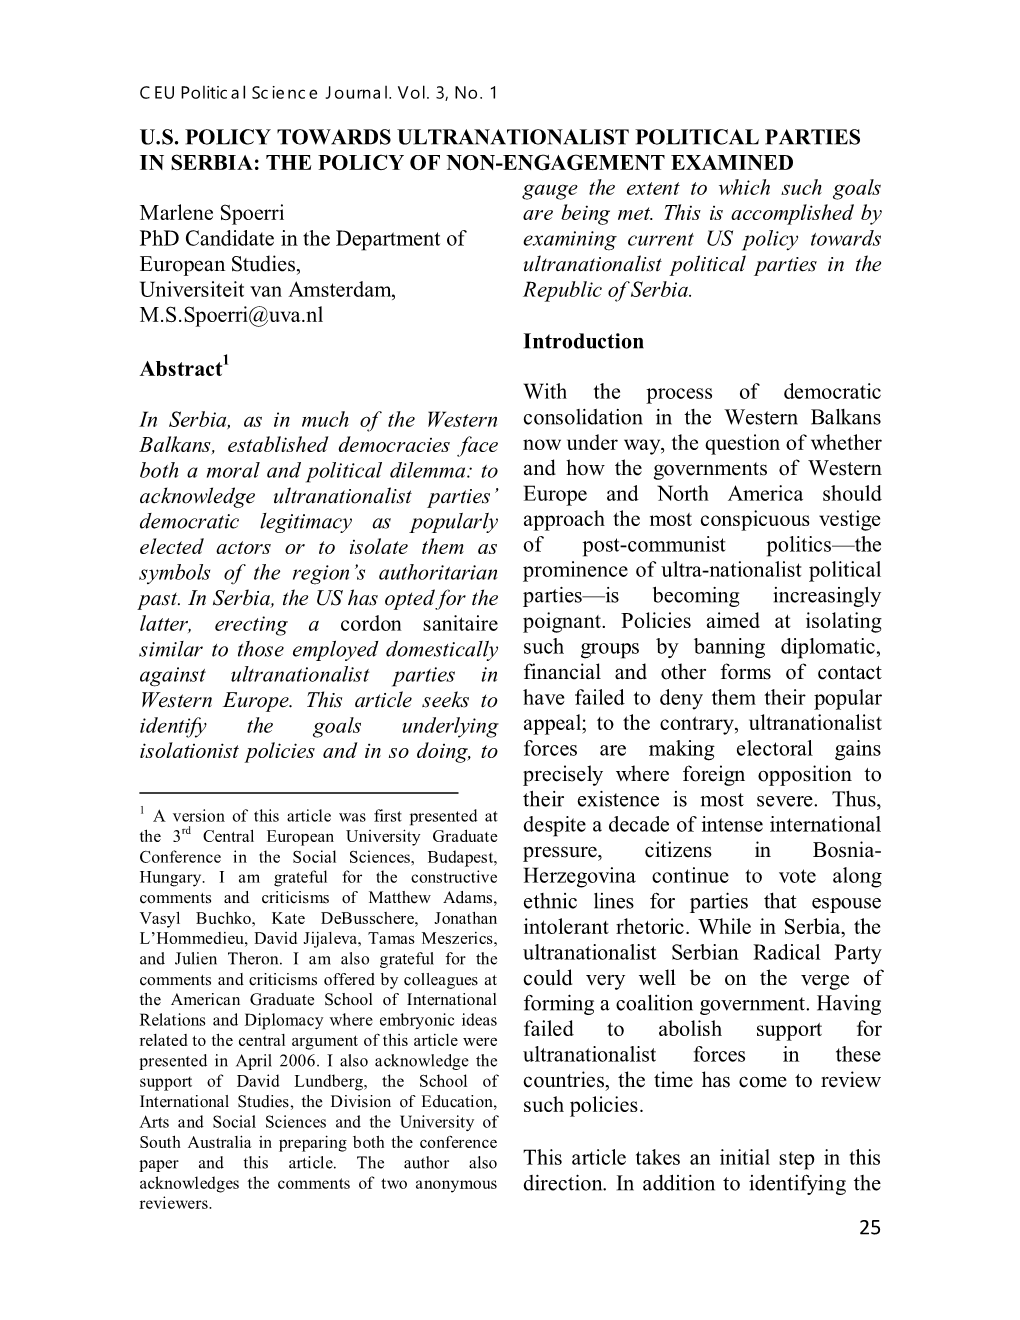 CEU Political Science Journal Vol. 3, No. 1 (Mar. 2008)